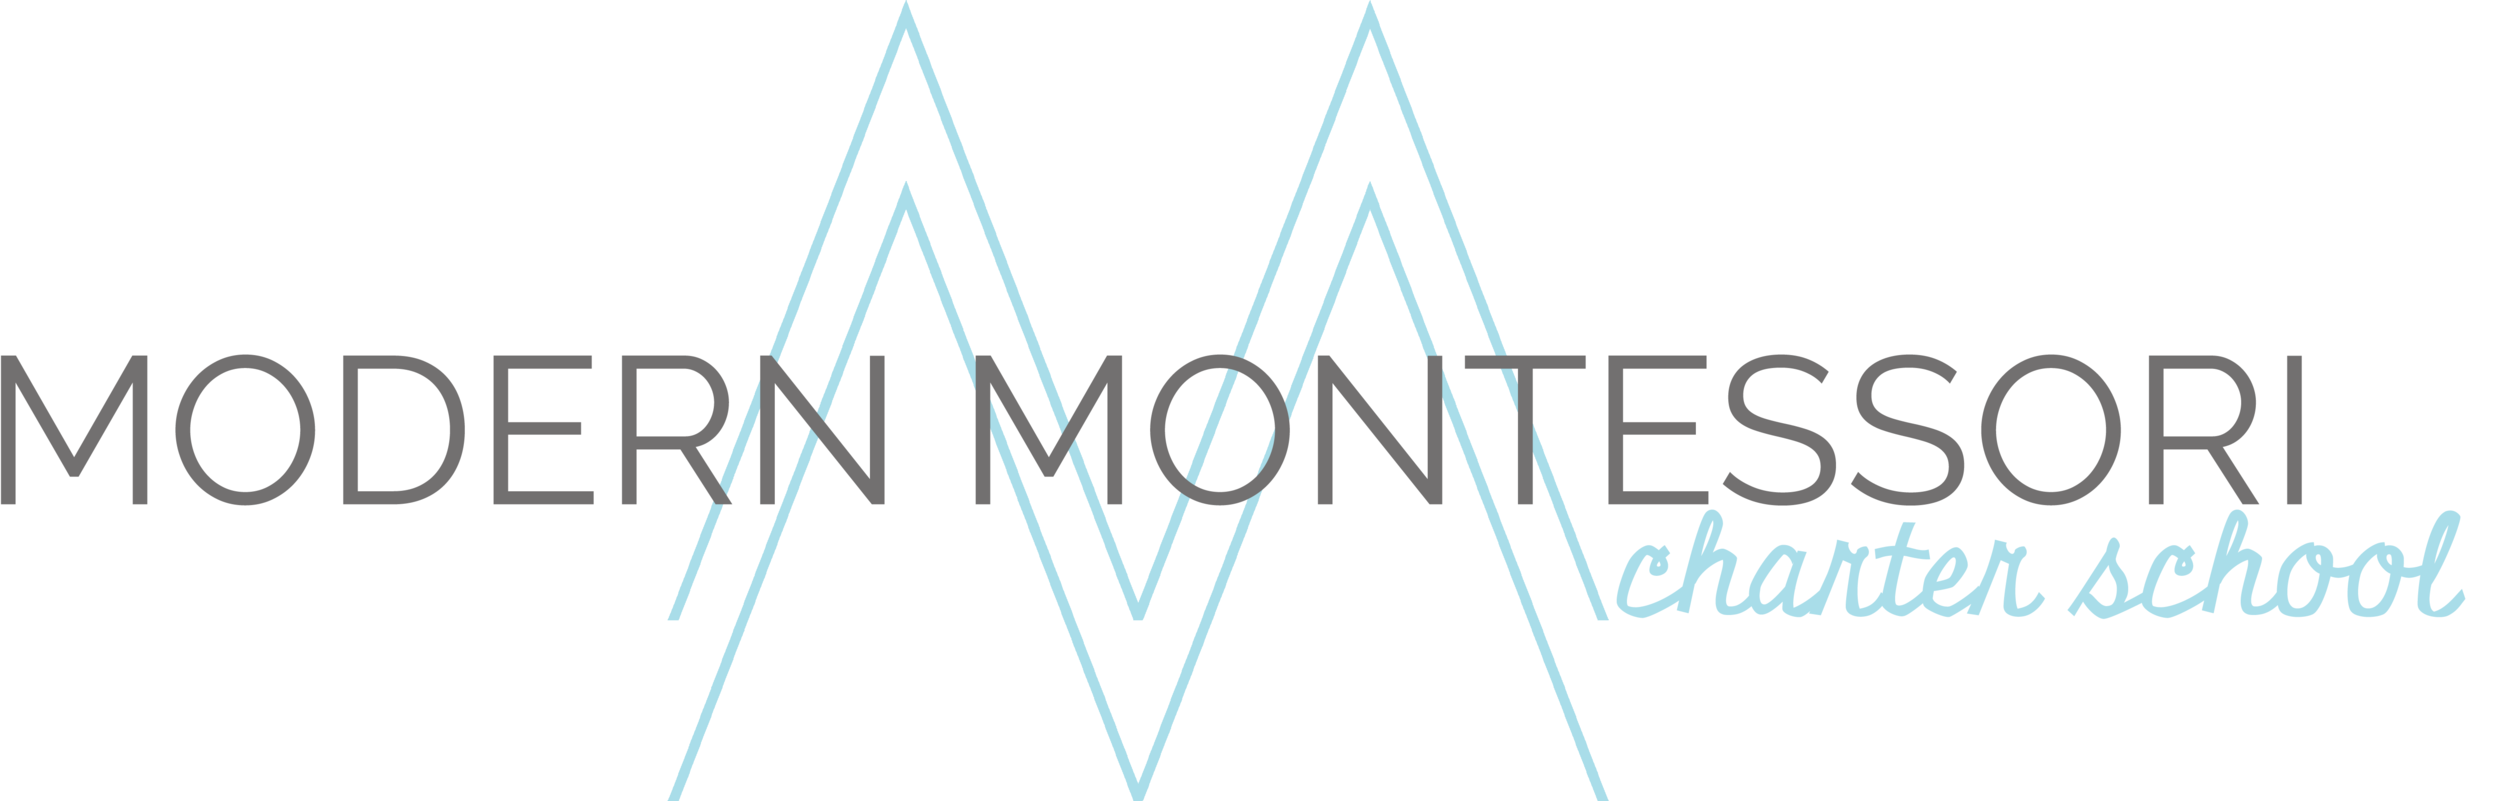 Modern Montessori Charter School